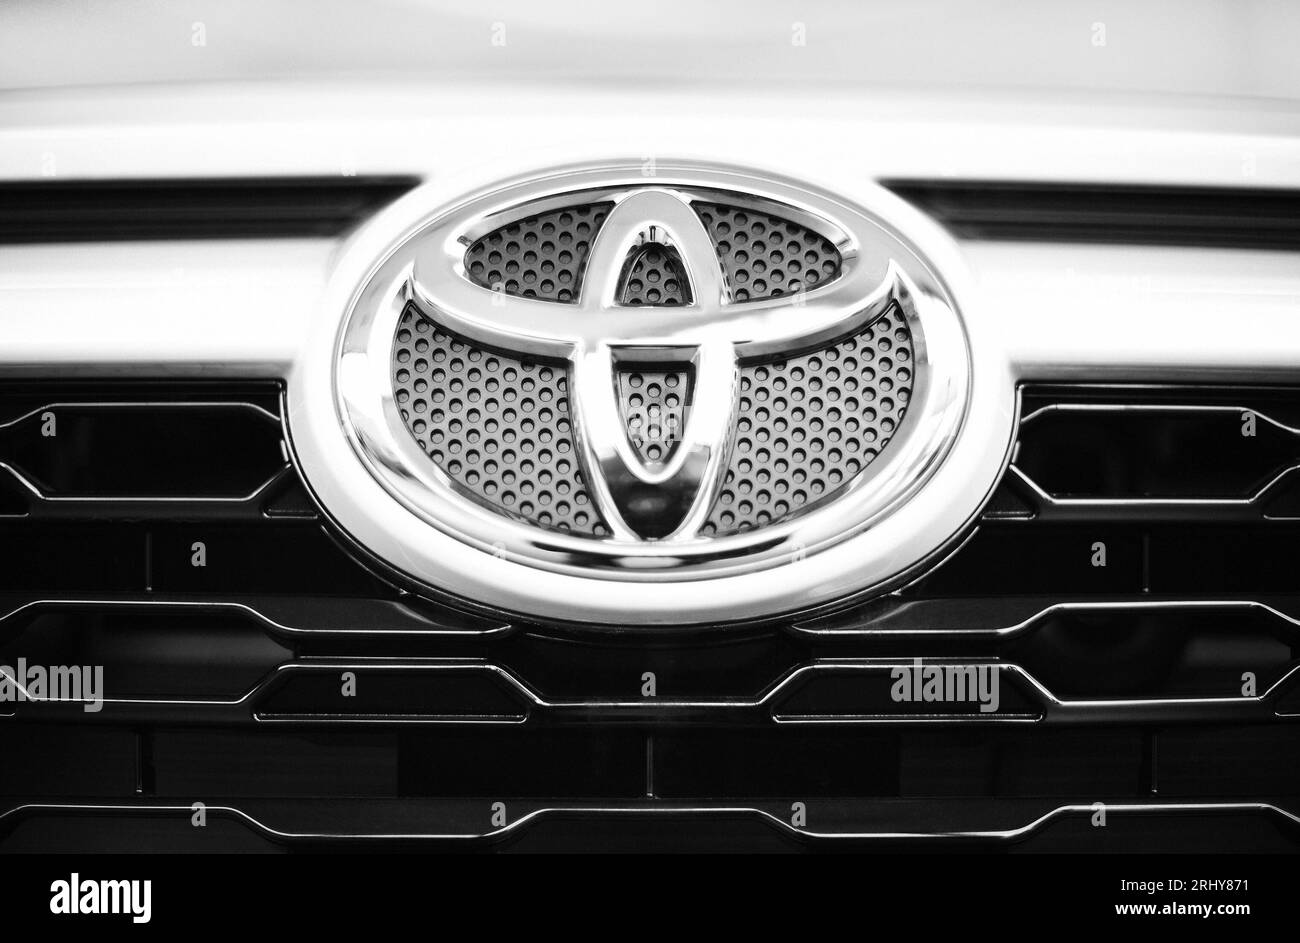 Toyota logo Black and White Stock Photos & Images - Alamy